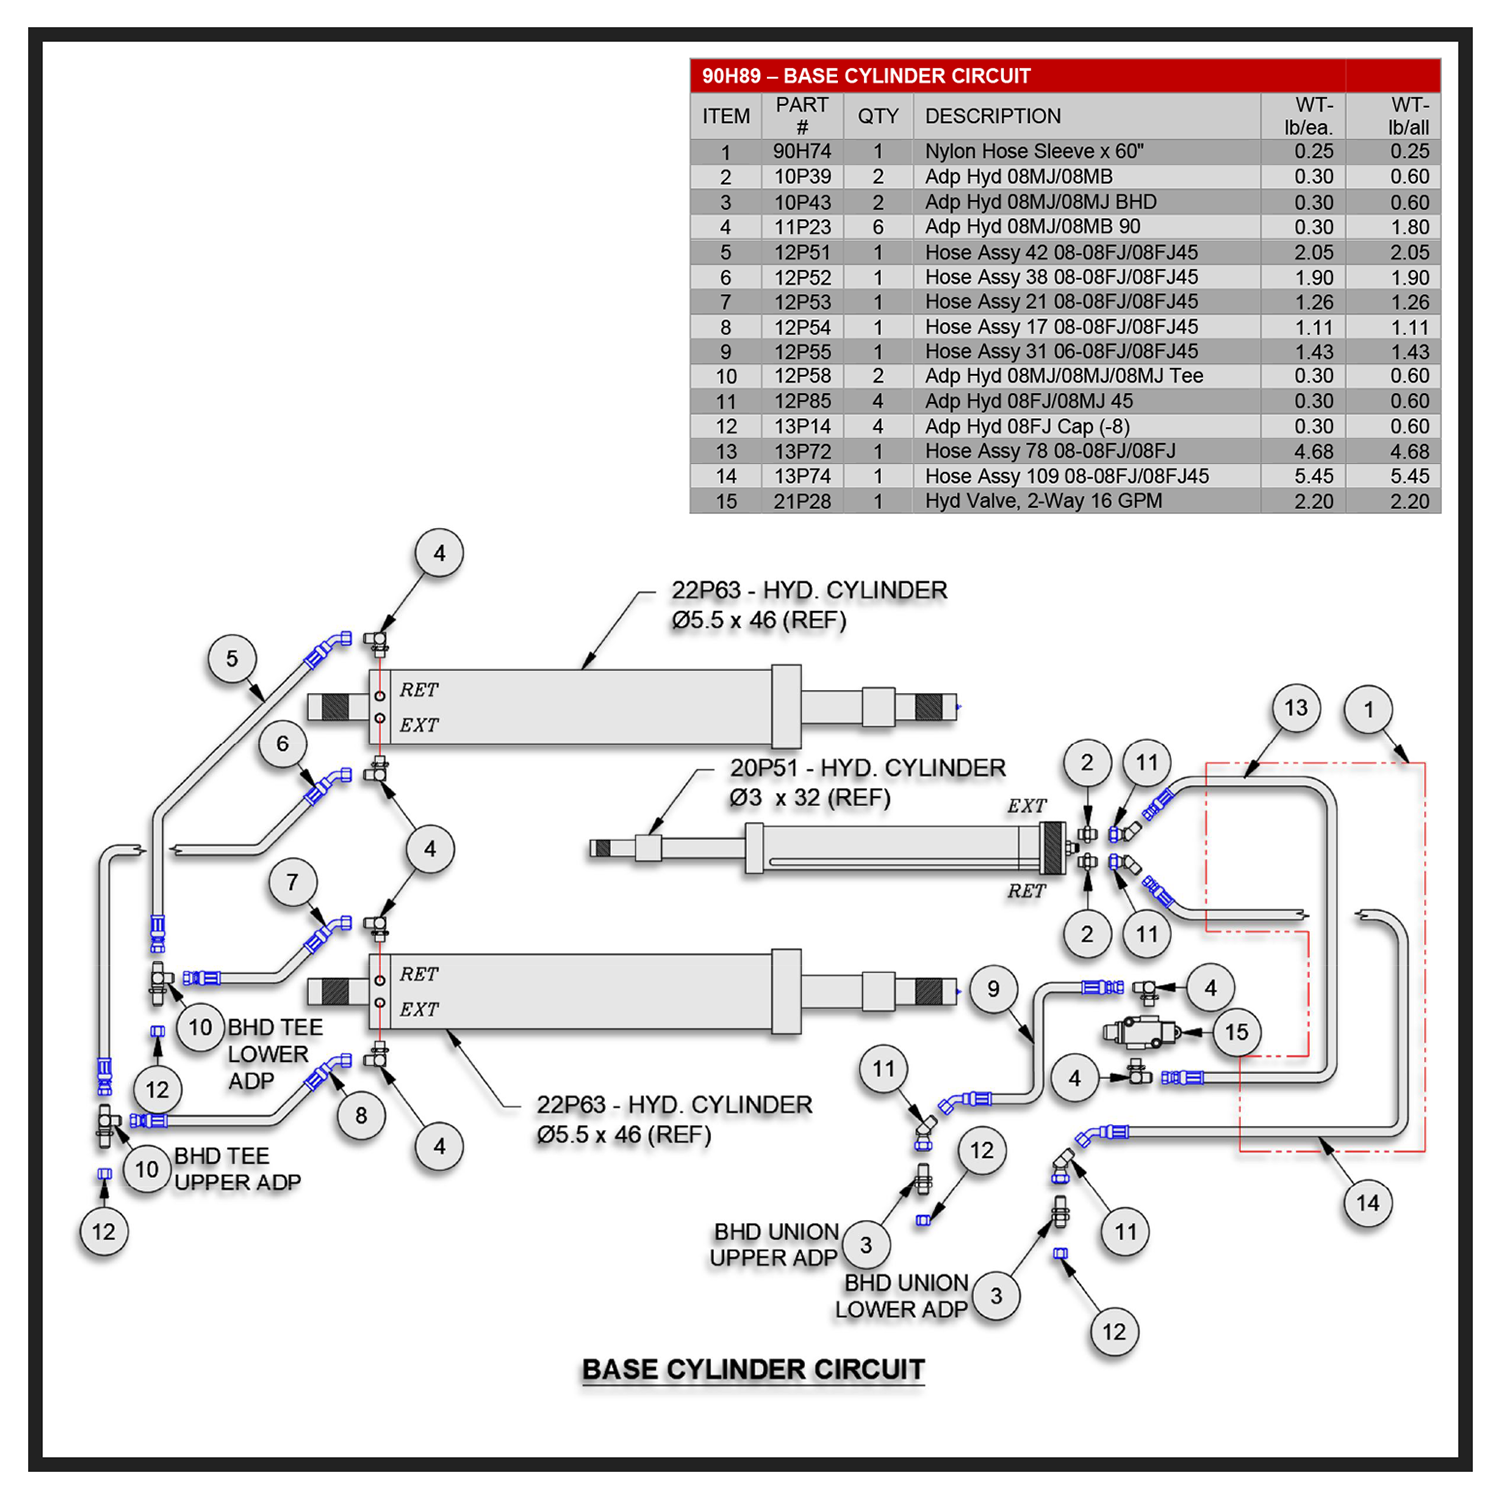 Swaploader 90H89 Base Cylinder Circuit Diagram